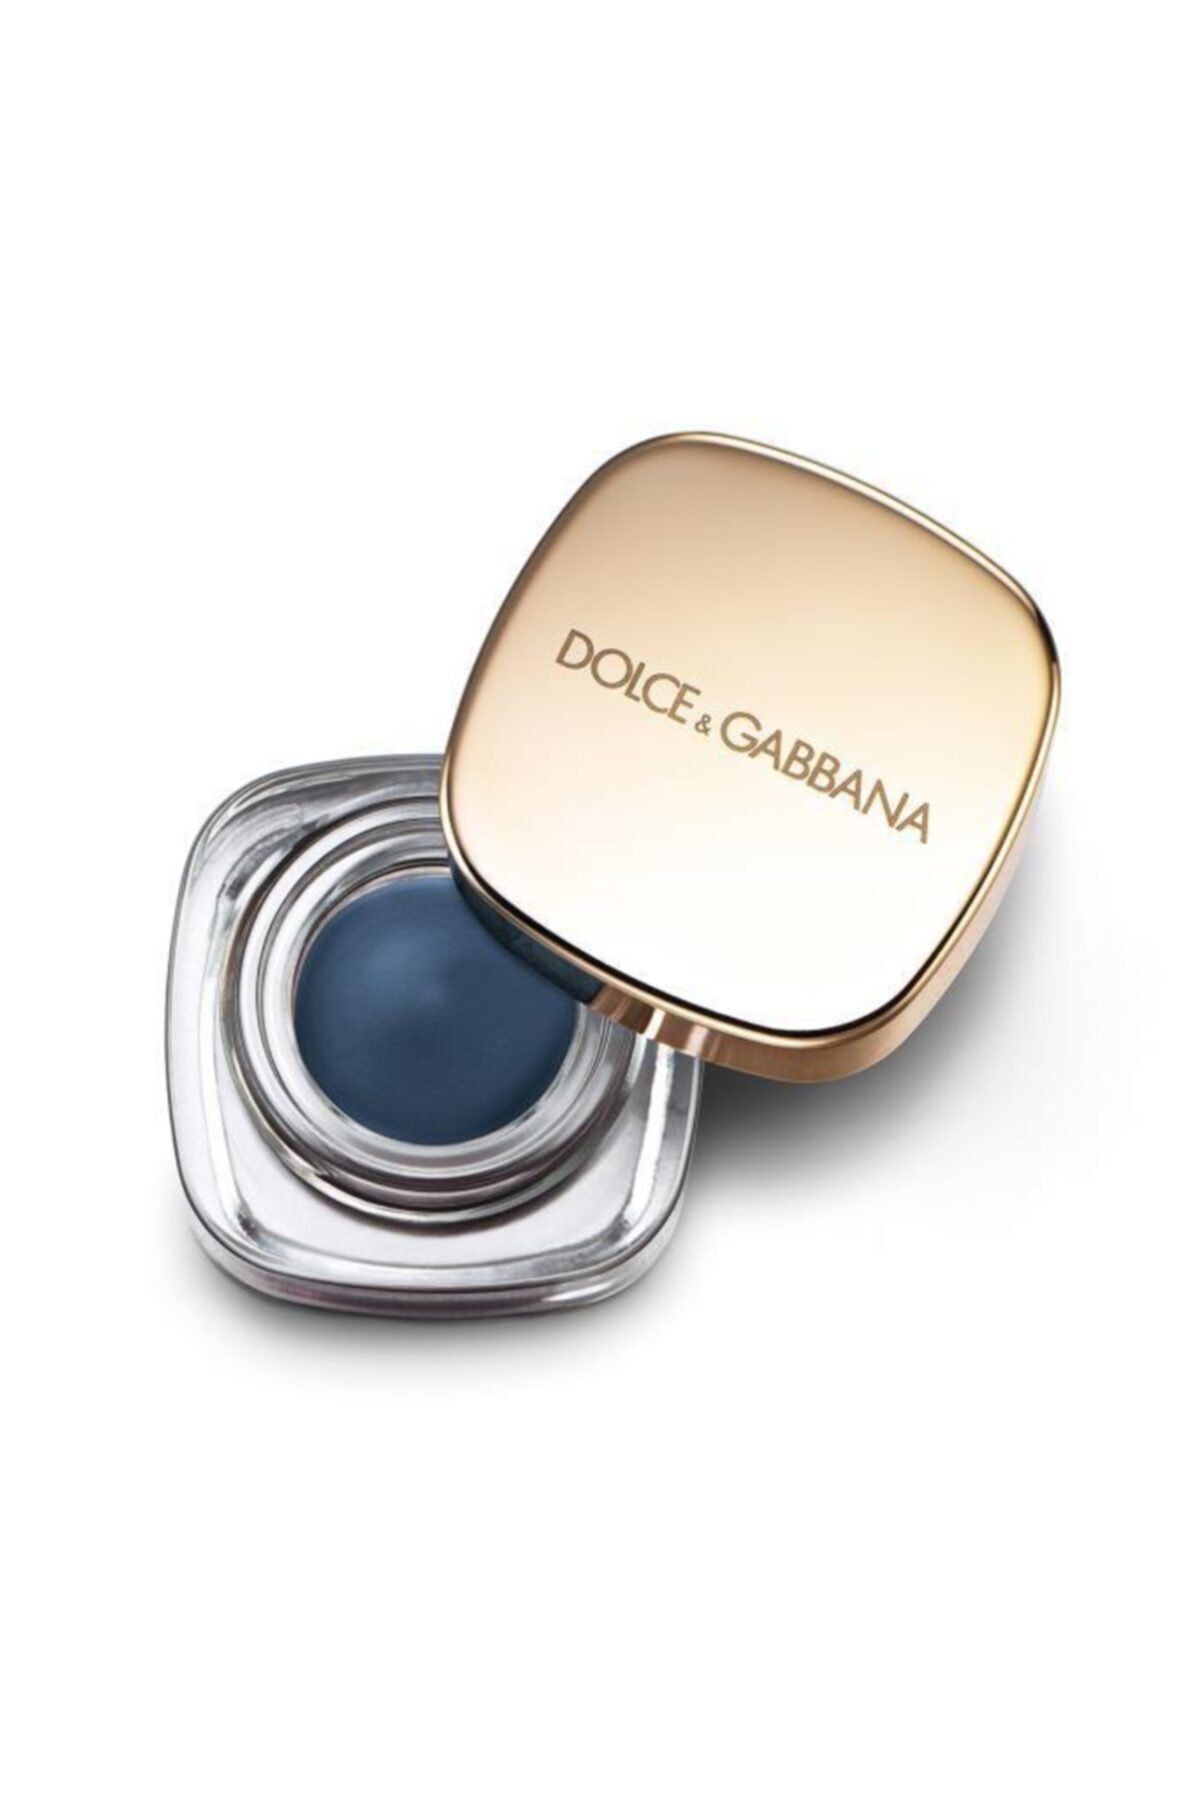 Dolce&Gabbana Perfect Mono Cream 110 Indaco Göz Farı